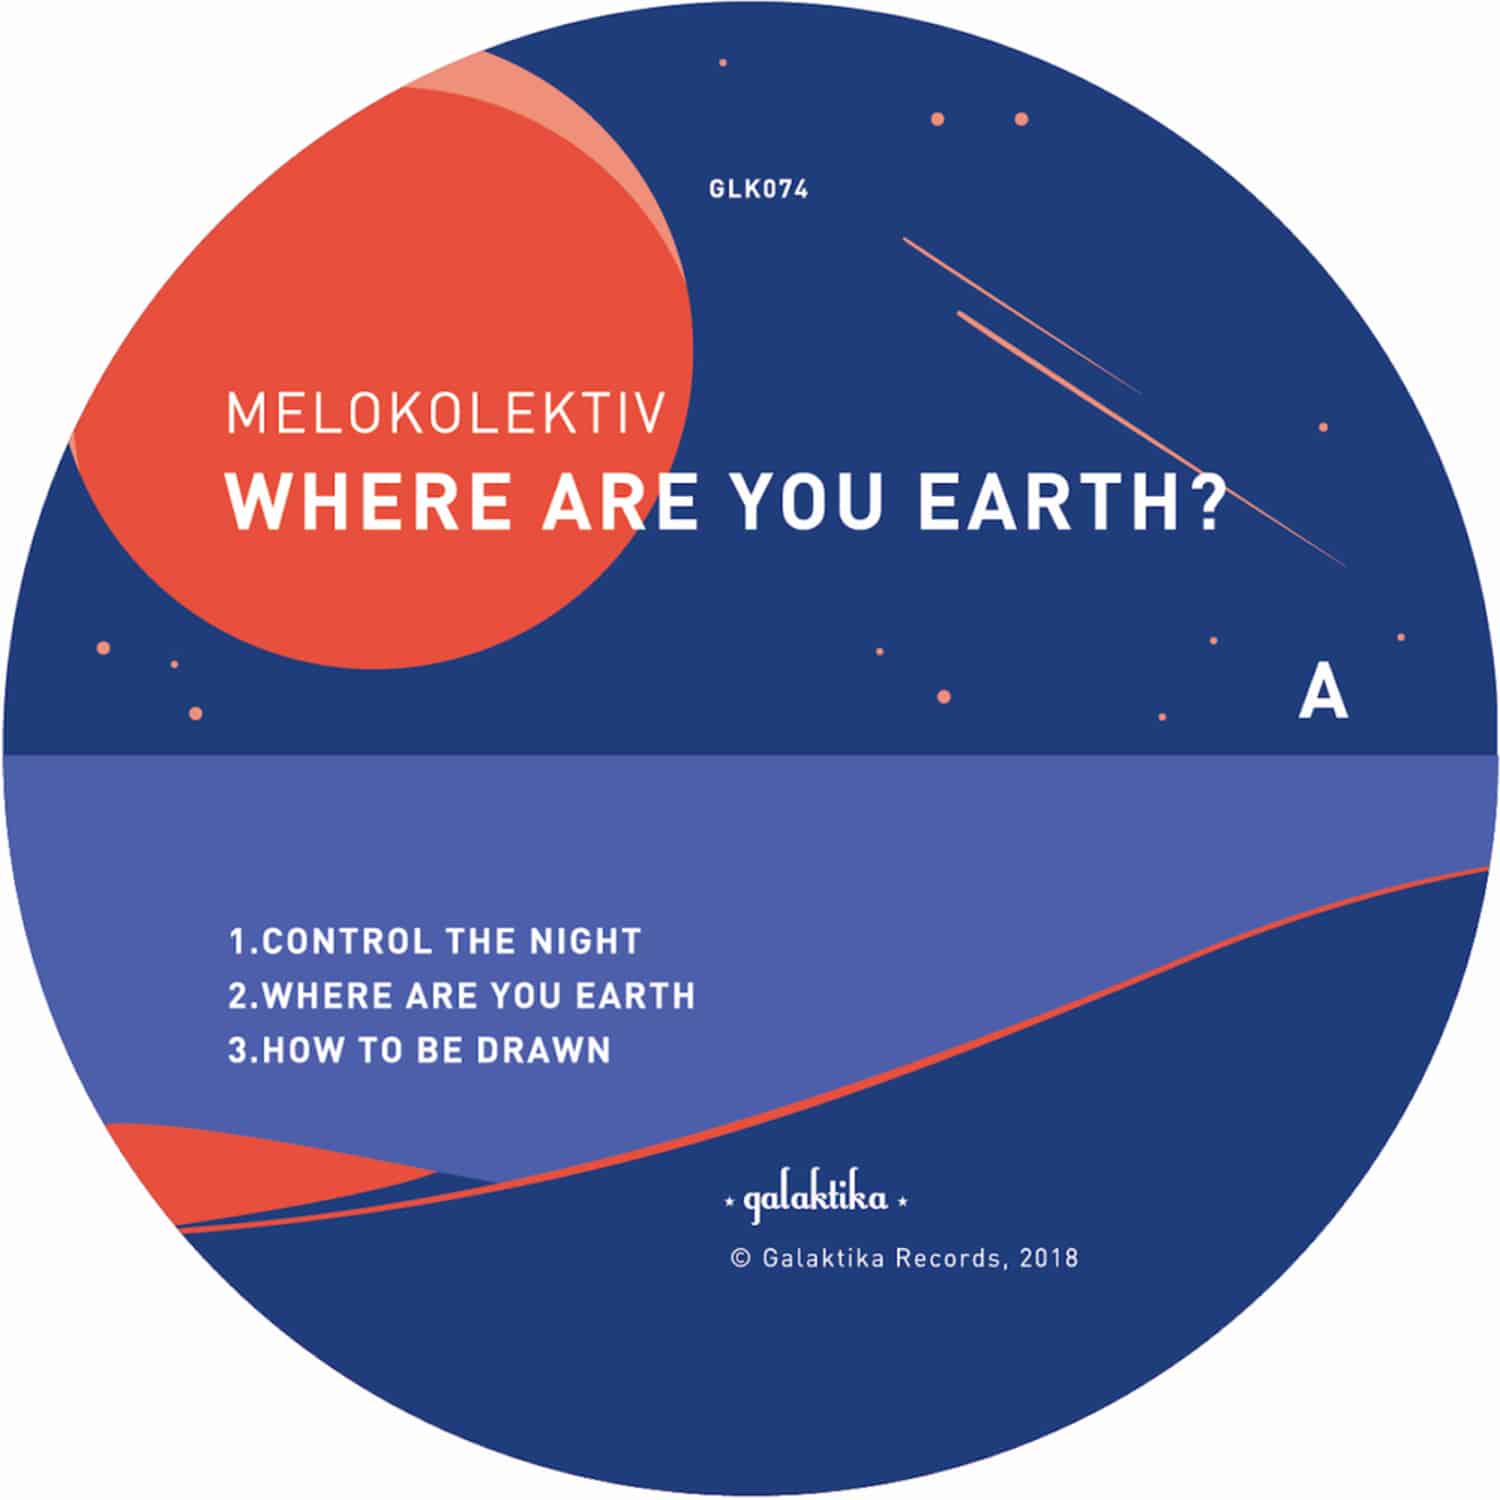 Melokolektiv - WHERE ARE YOU EARTH?